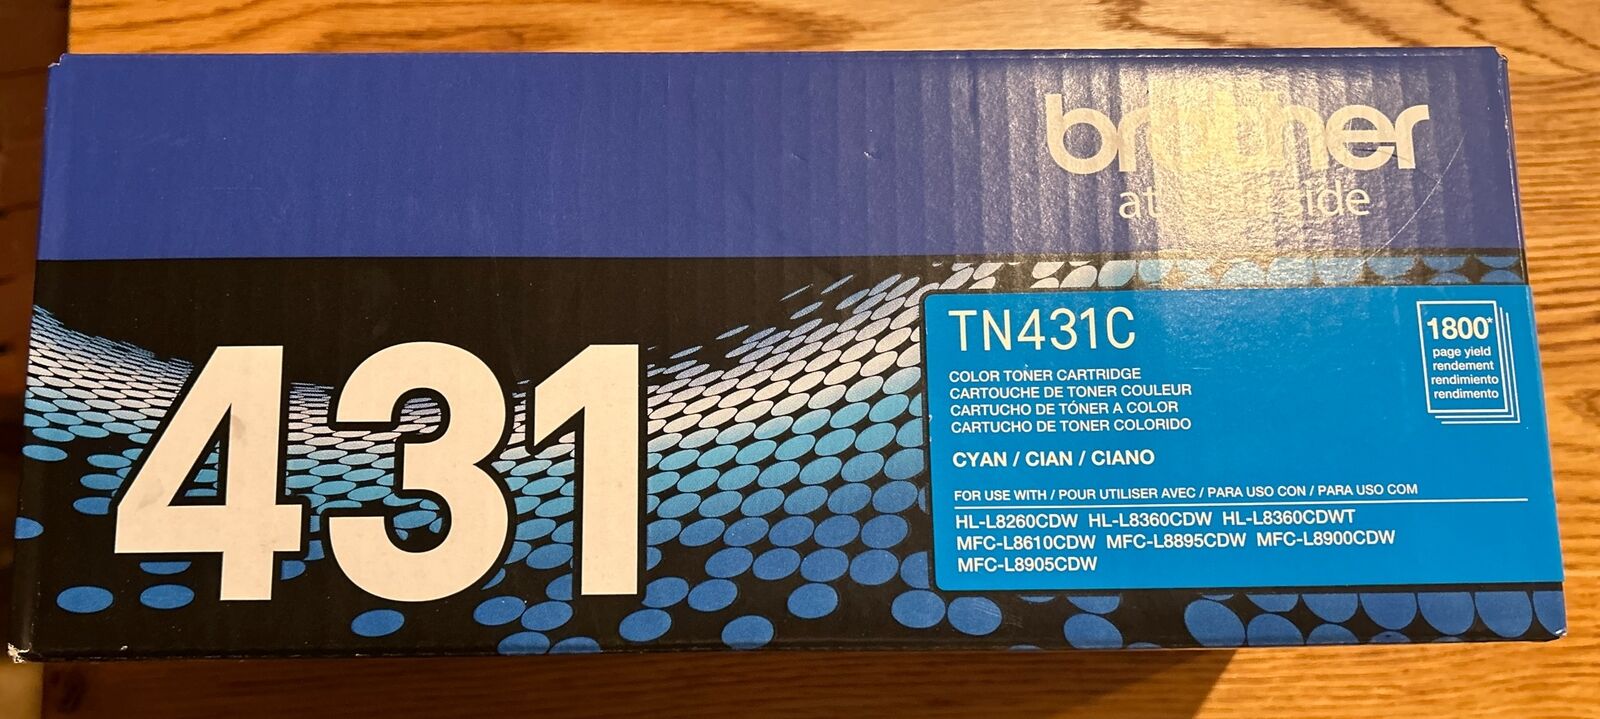 Genuine Brother TN-431C CYAN Standard Yield Toner Cartridge New Sealed Box